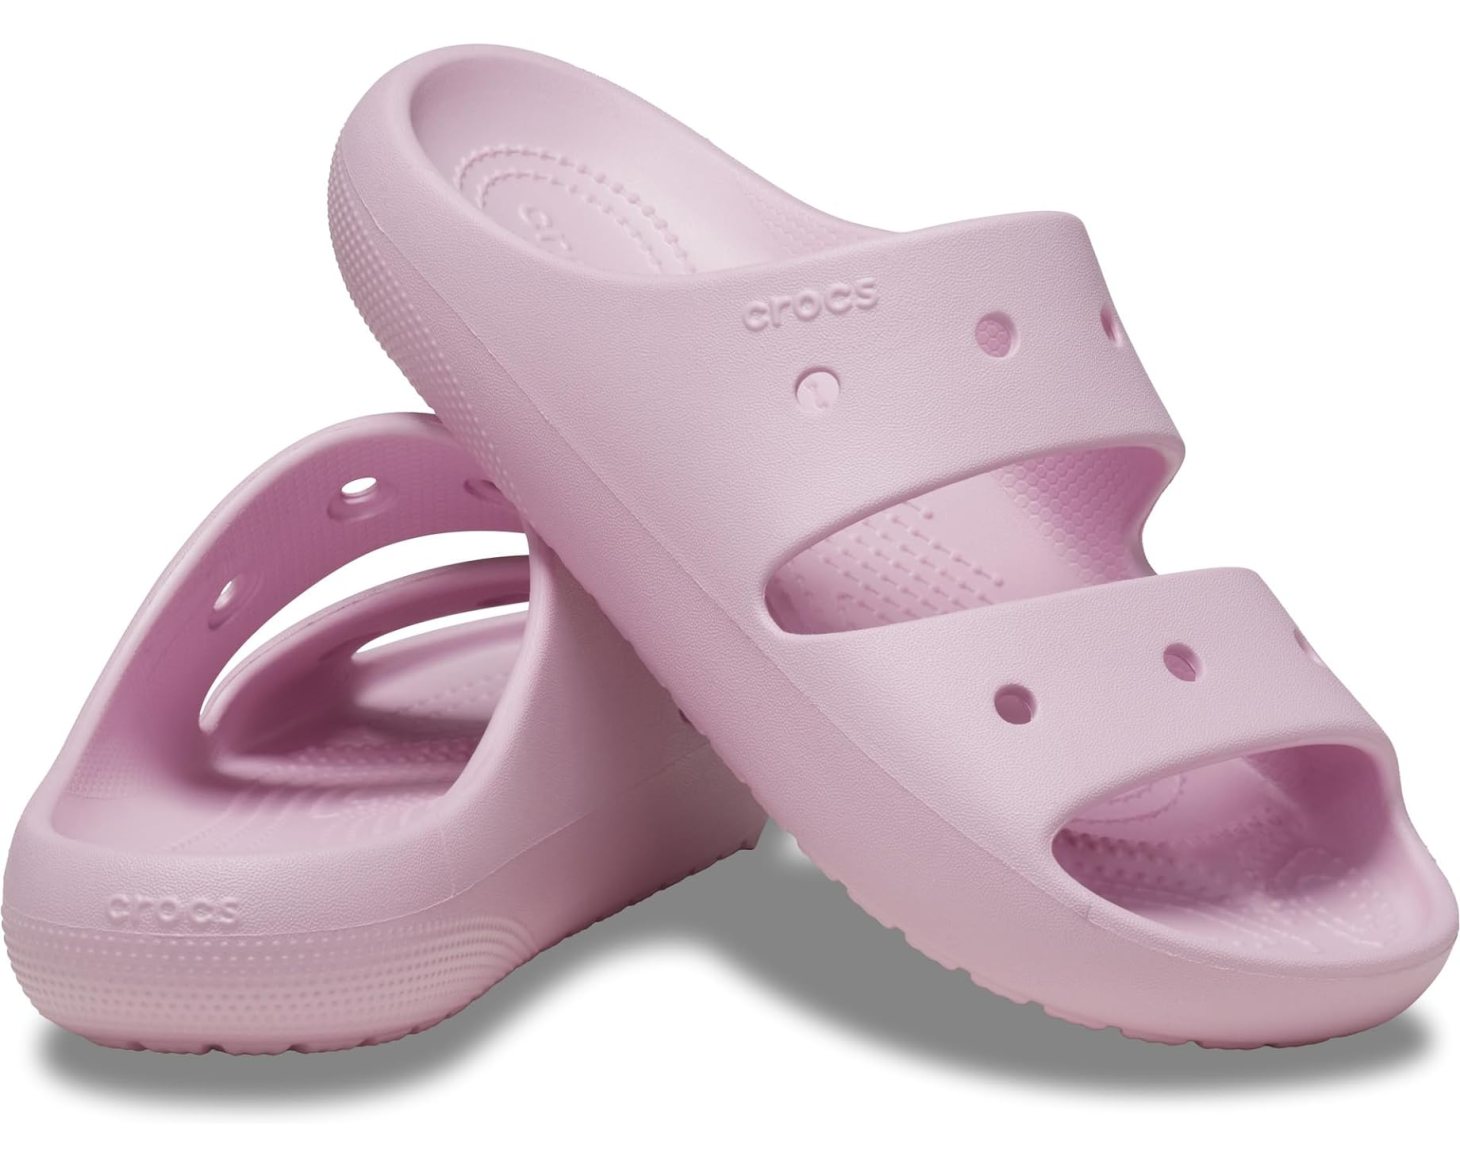 crocs classic sandal v2, one of the best travel sandals